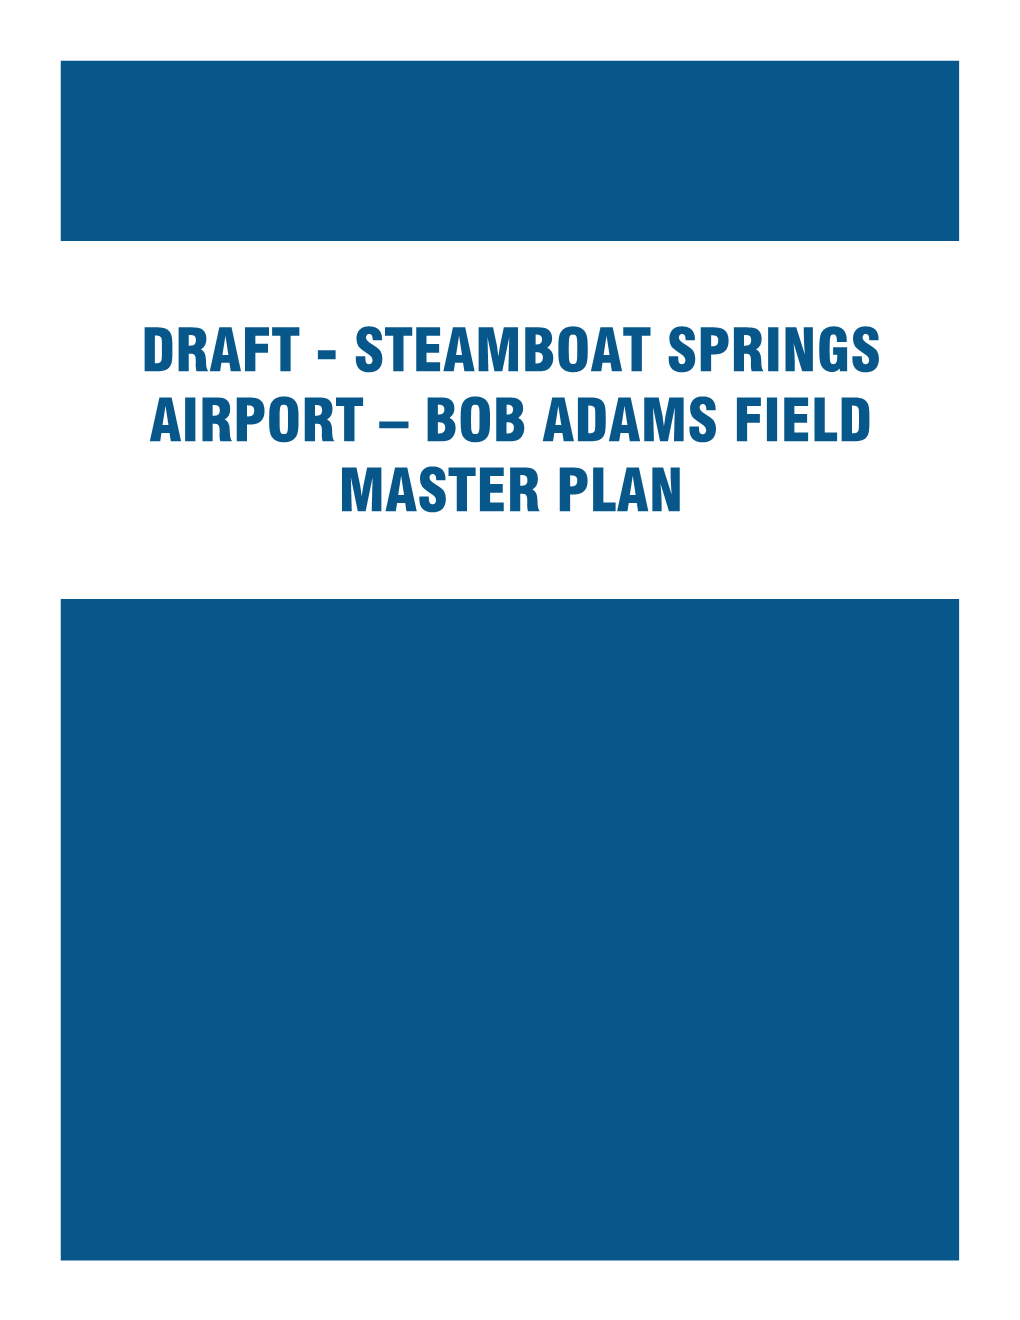 Draft - Steamboat Springs Airport – Bob Adams Field Master Plan